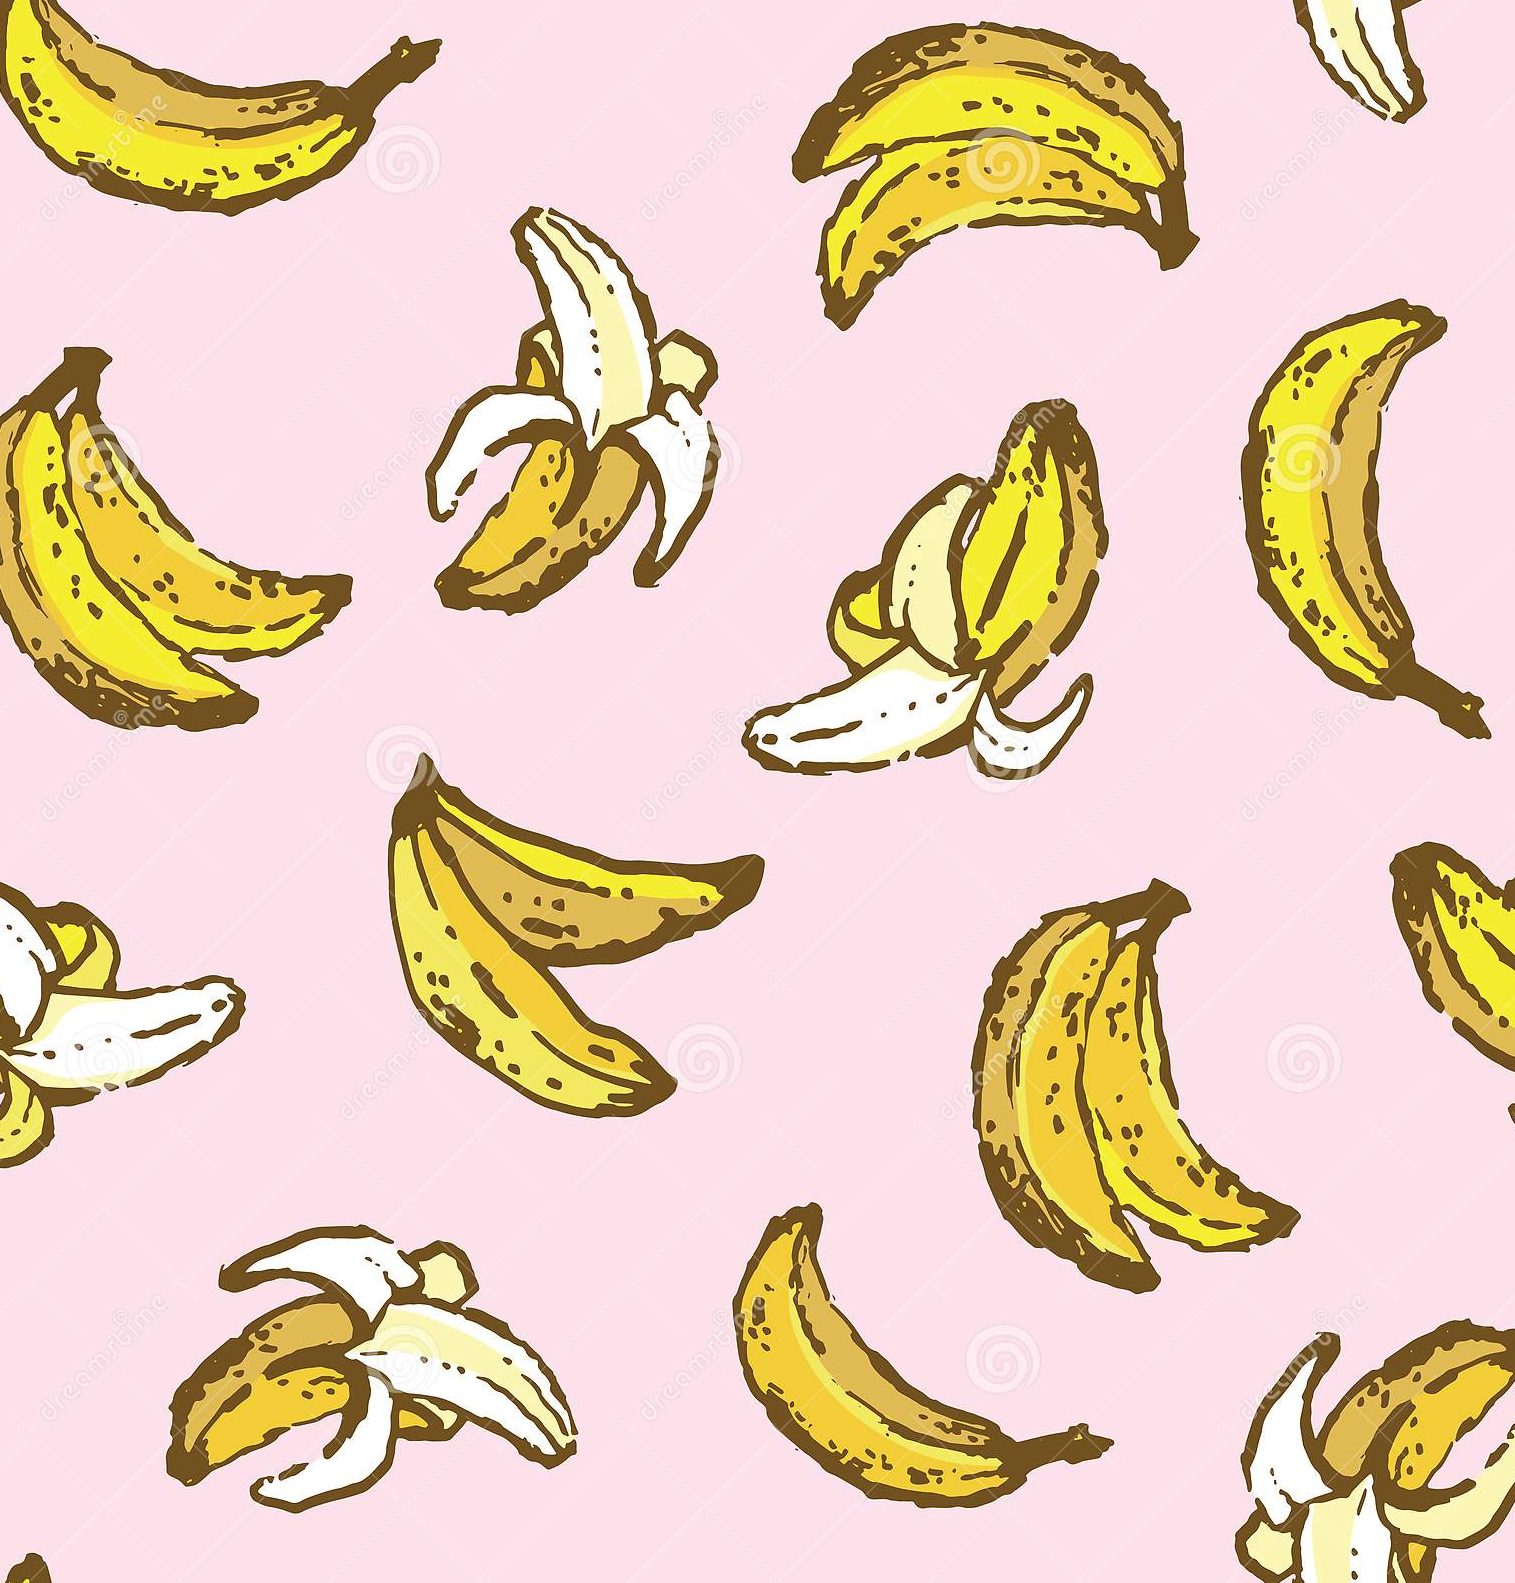 Is nendran banana good for babies?